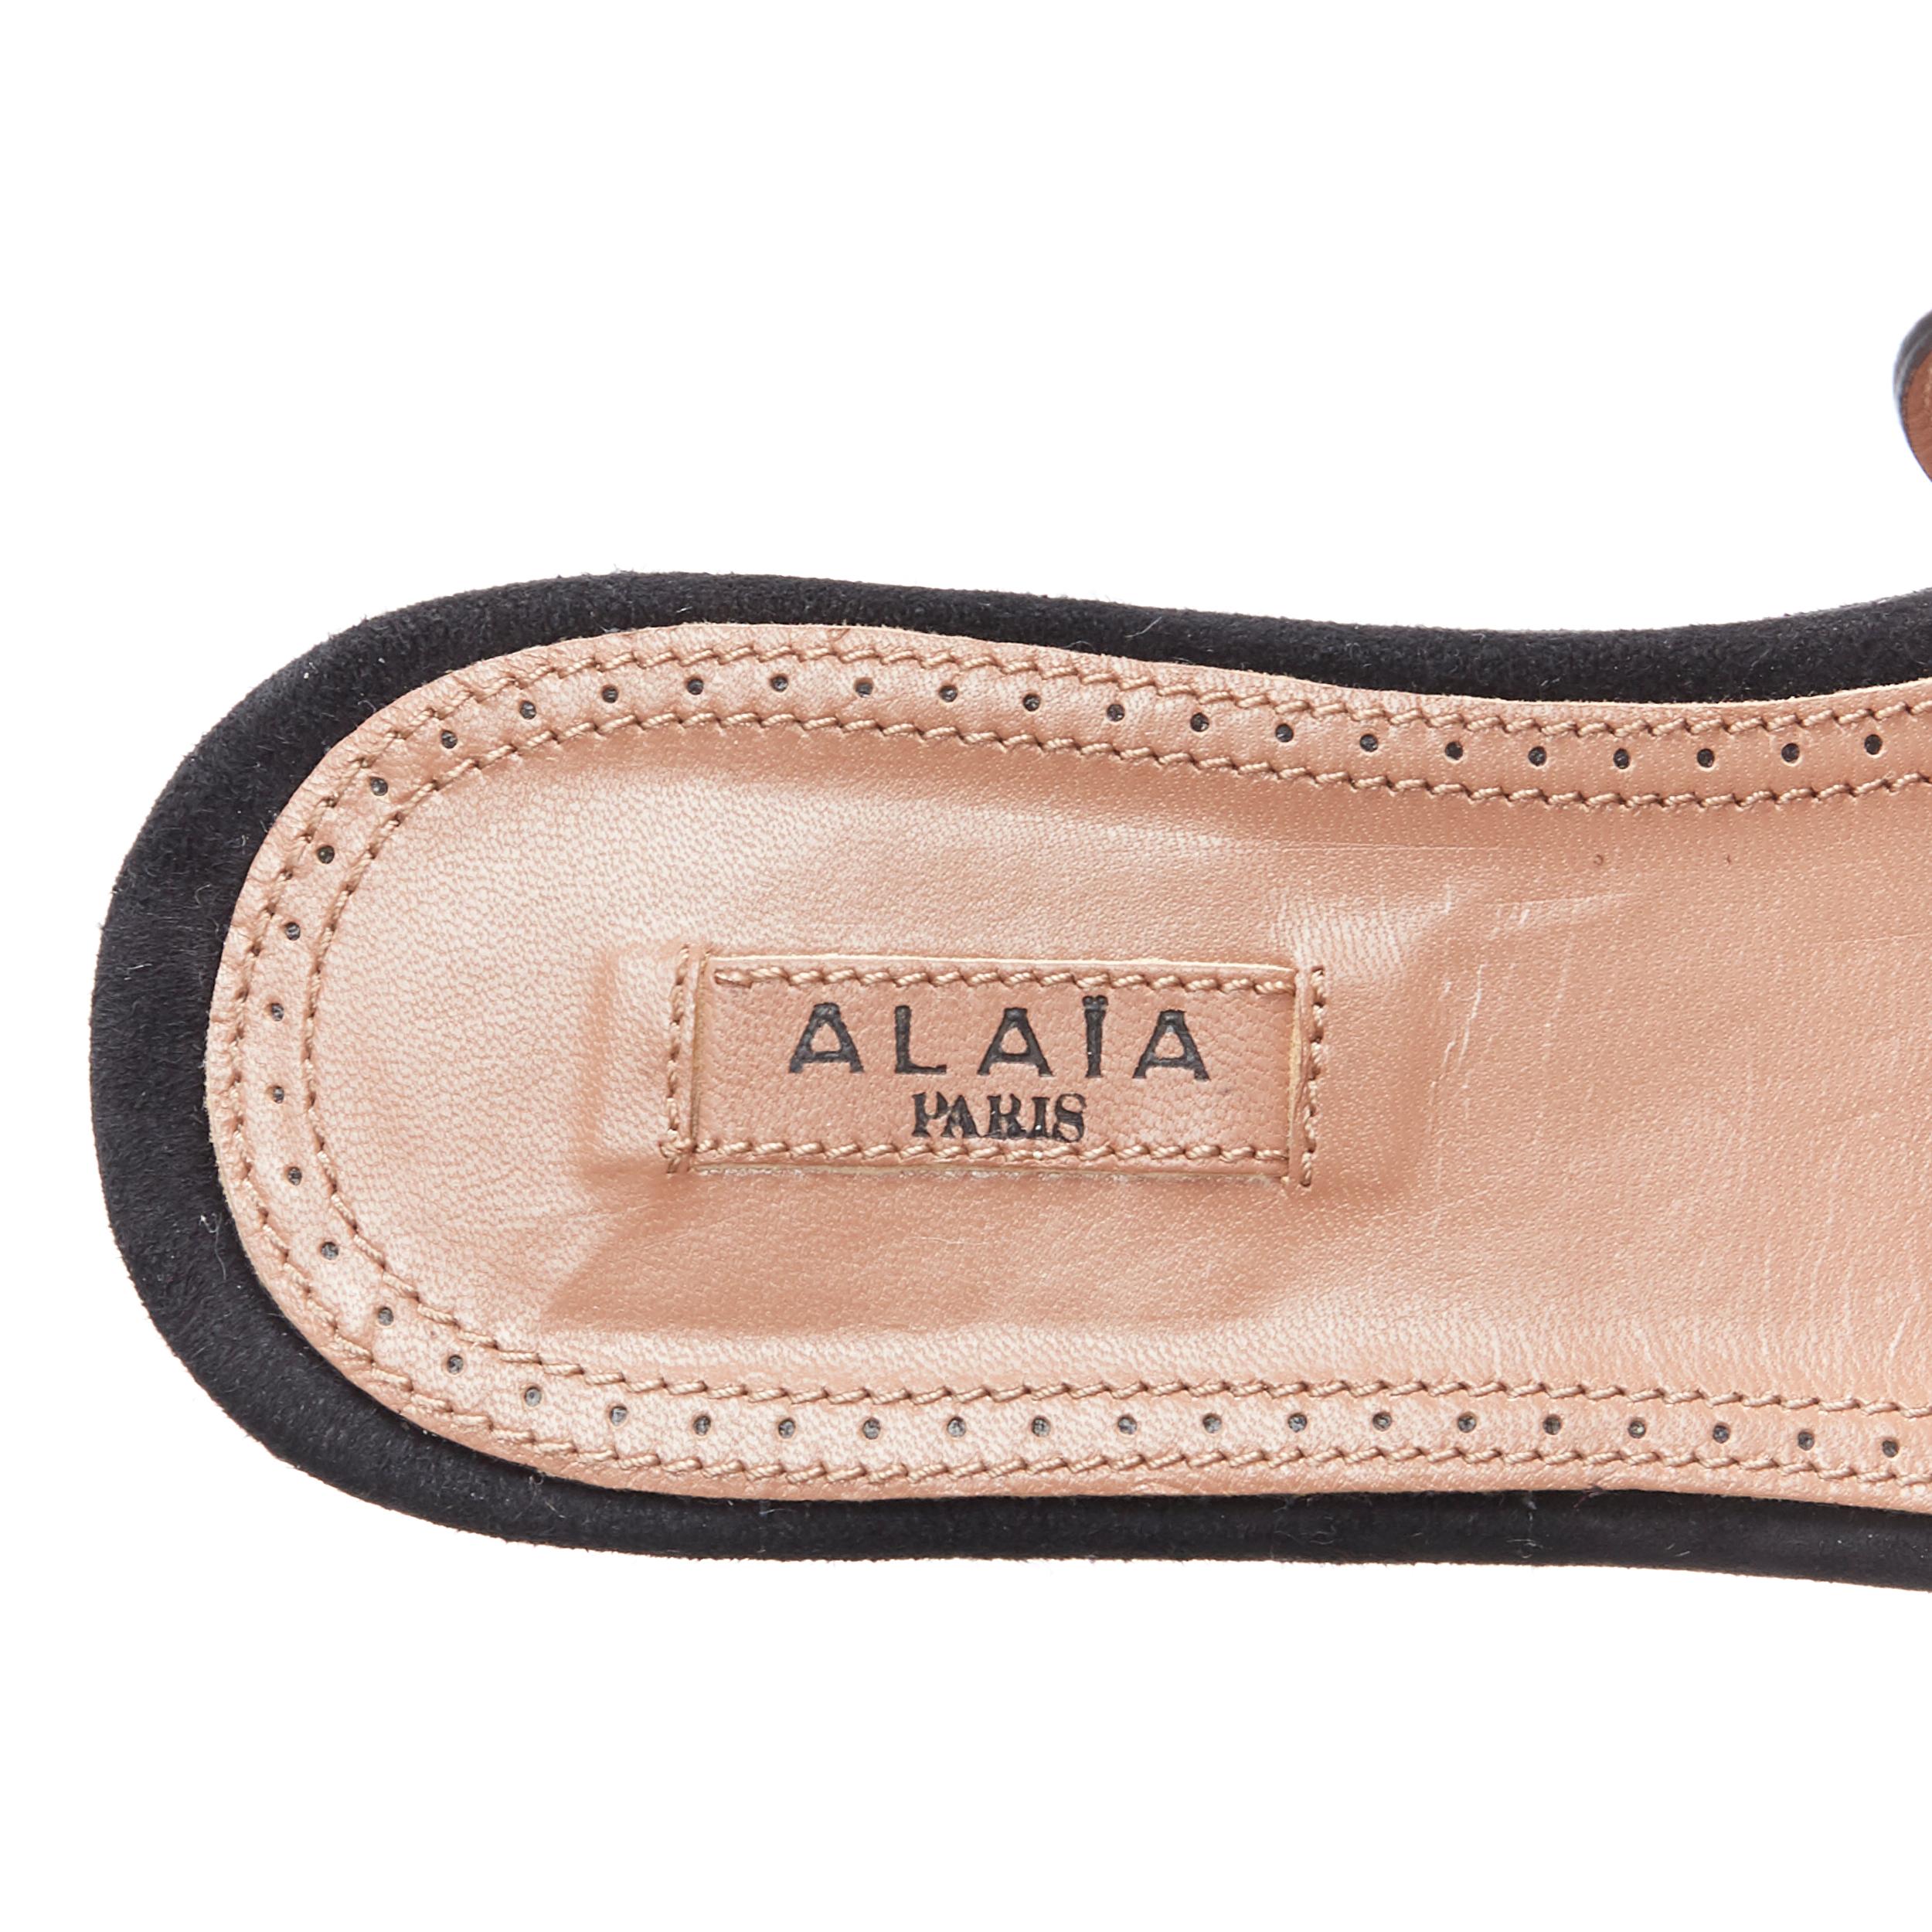 ALAIA black suede geometric cut out open toe ankle wrap flat sandals EU37.5 4